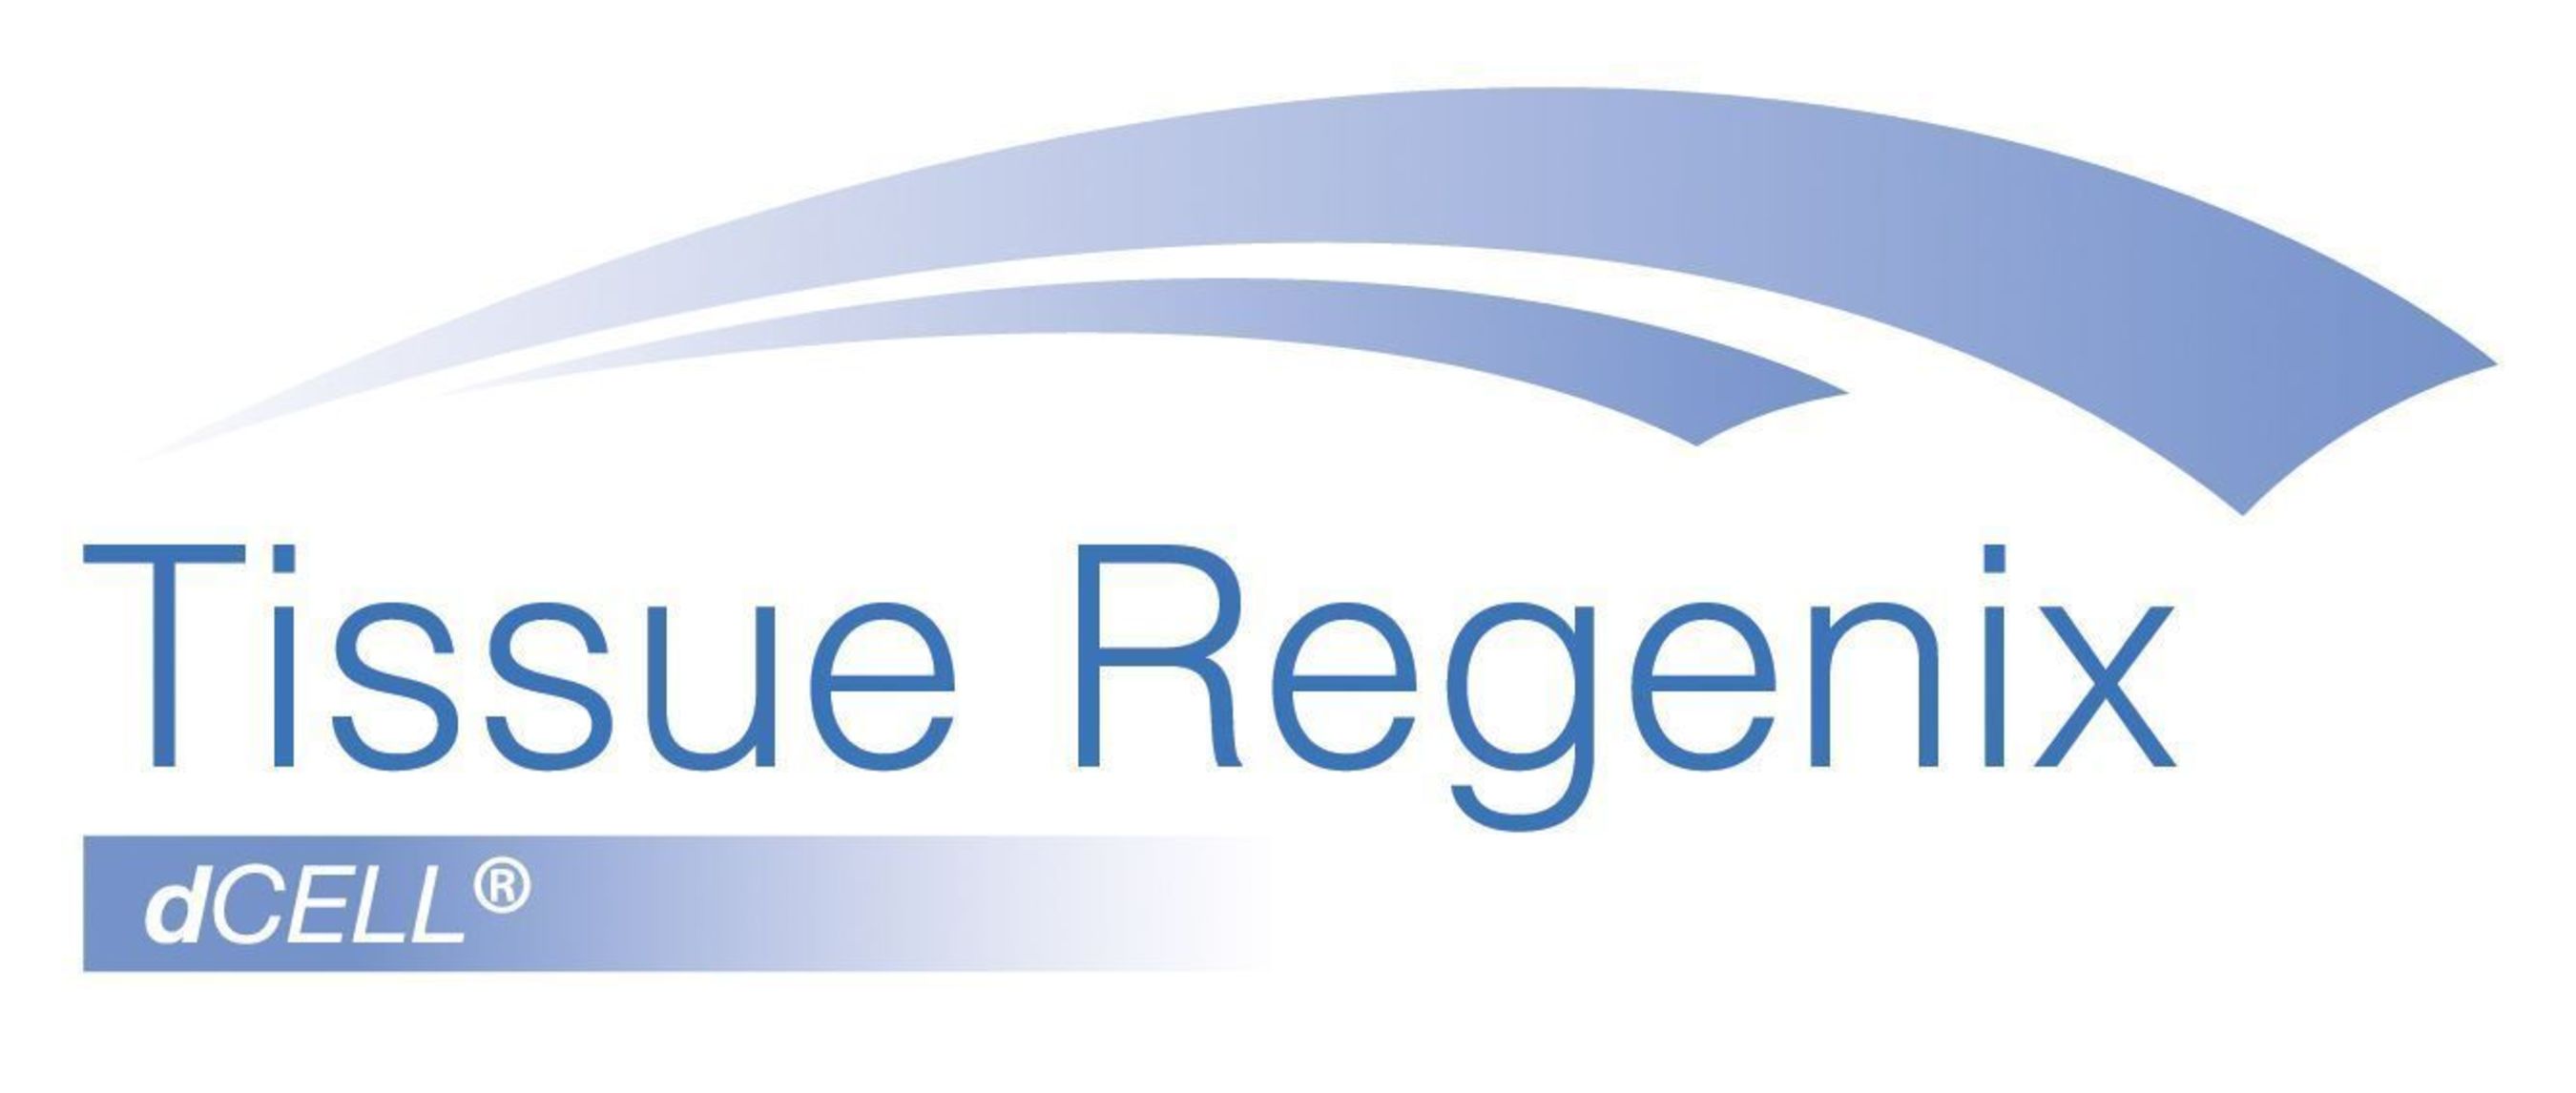 Tissue Regenix (PRNewsFoto/Tissue Regenix Group)